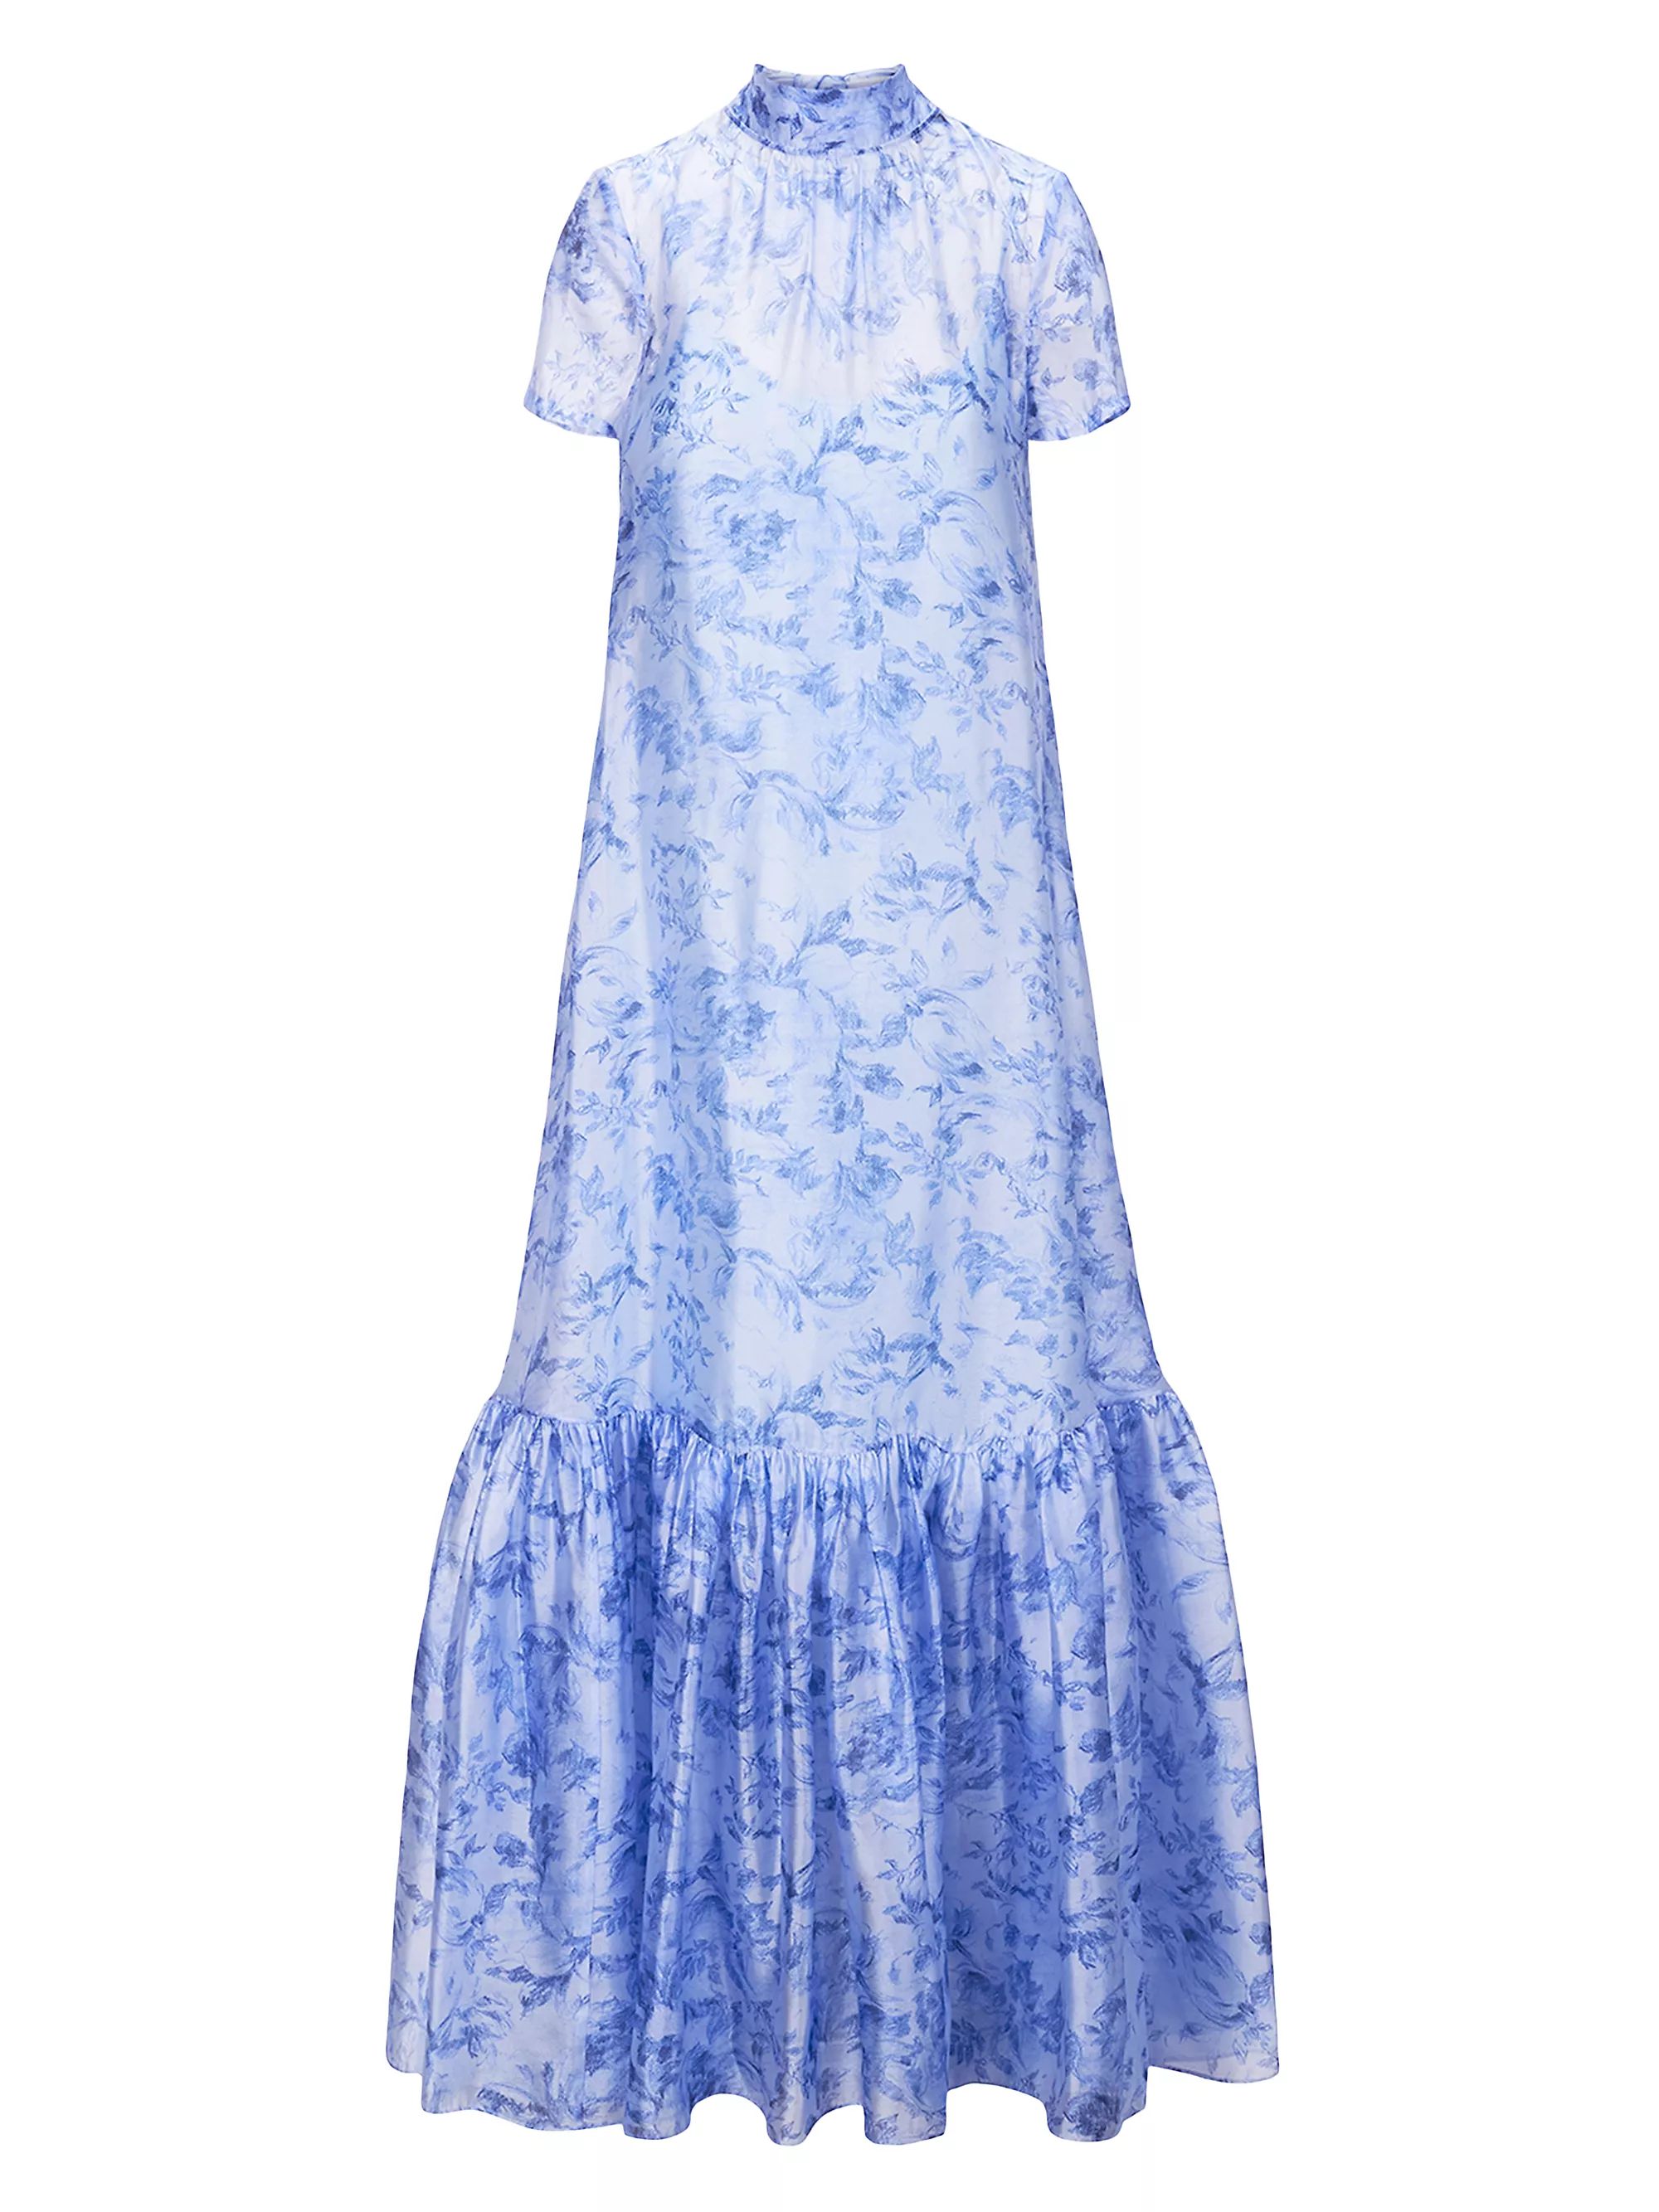 Periwinkle Sketchbook FloralAll Evening GownsStaudCalluna Organza Floor-Length Dress$495
        ... | Saks Fifth Avenue